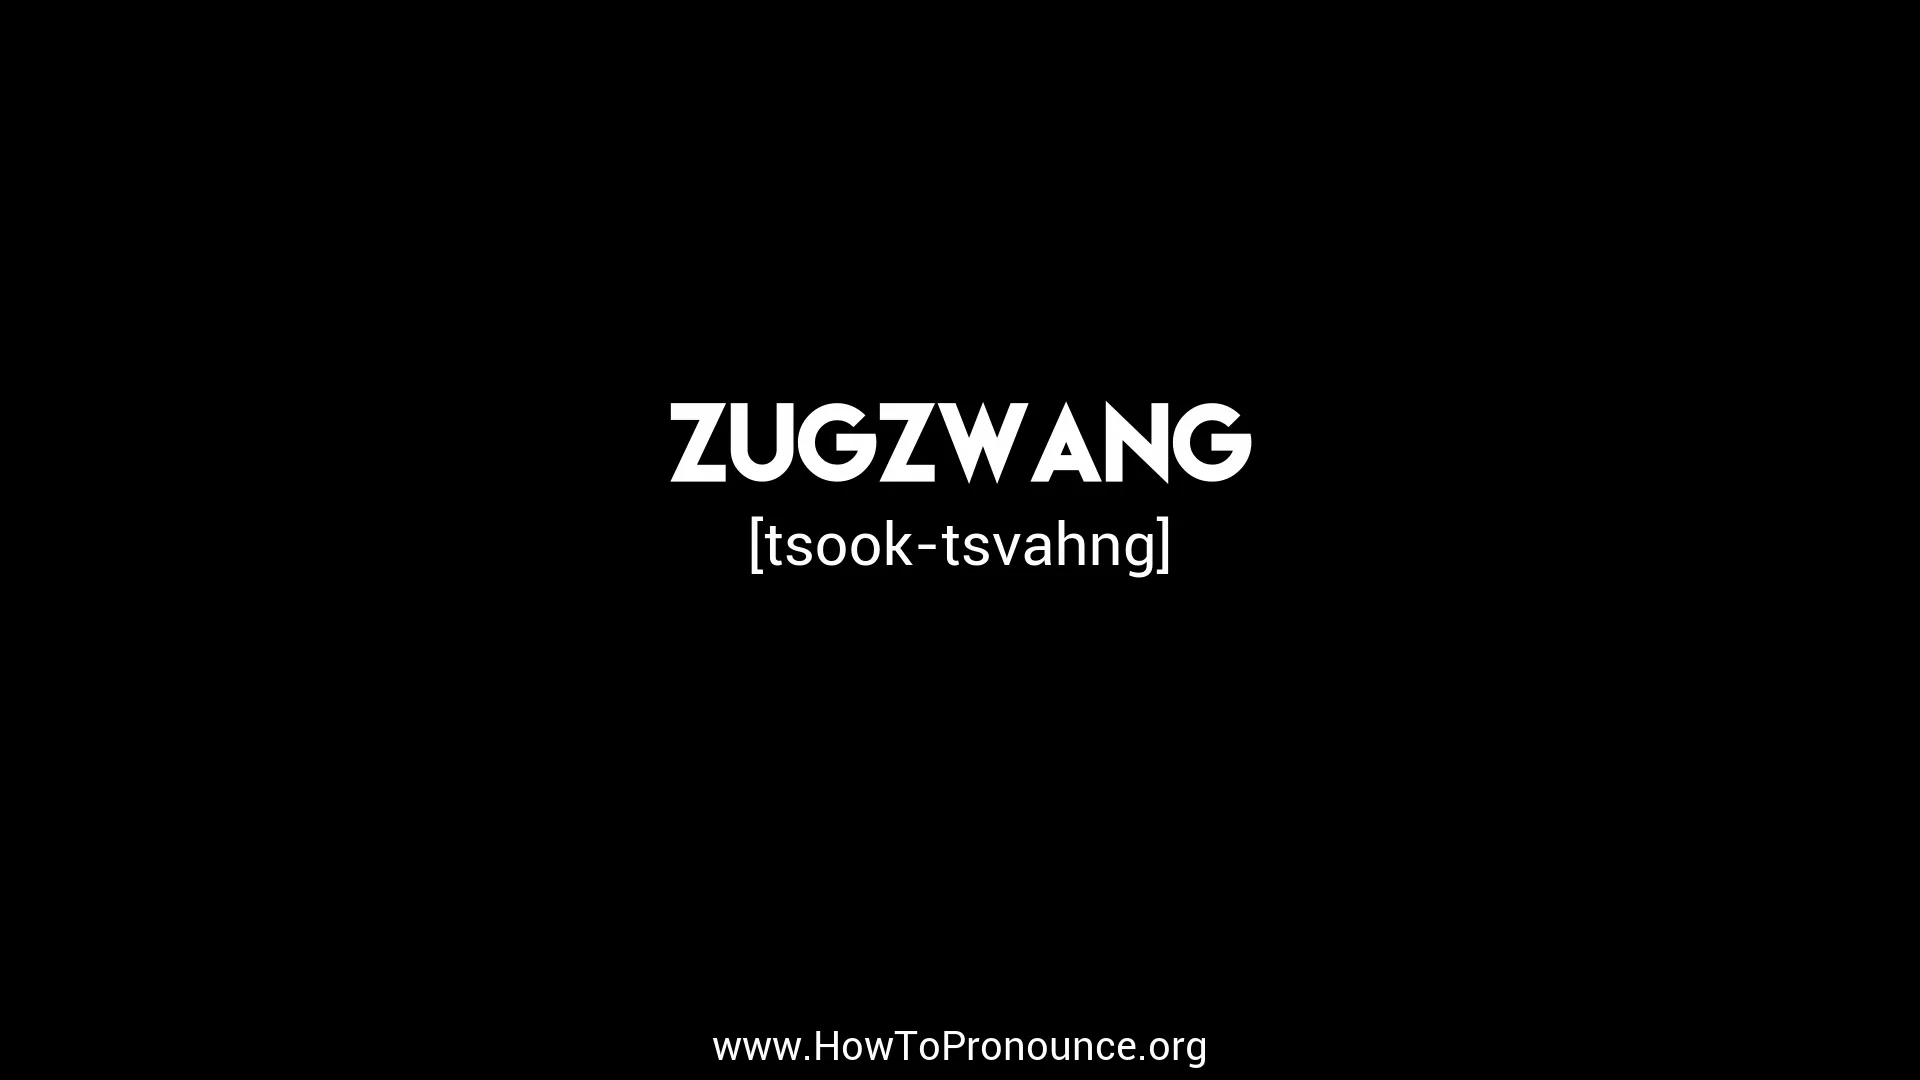 How to Pronounce zugzwang on Vimeo